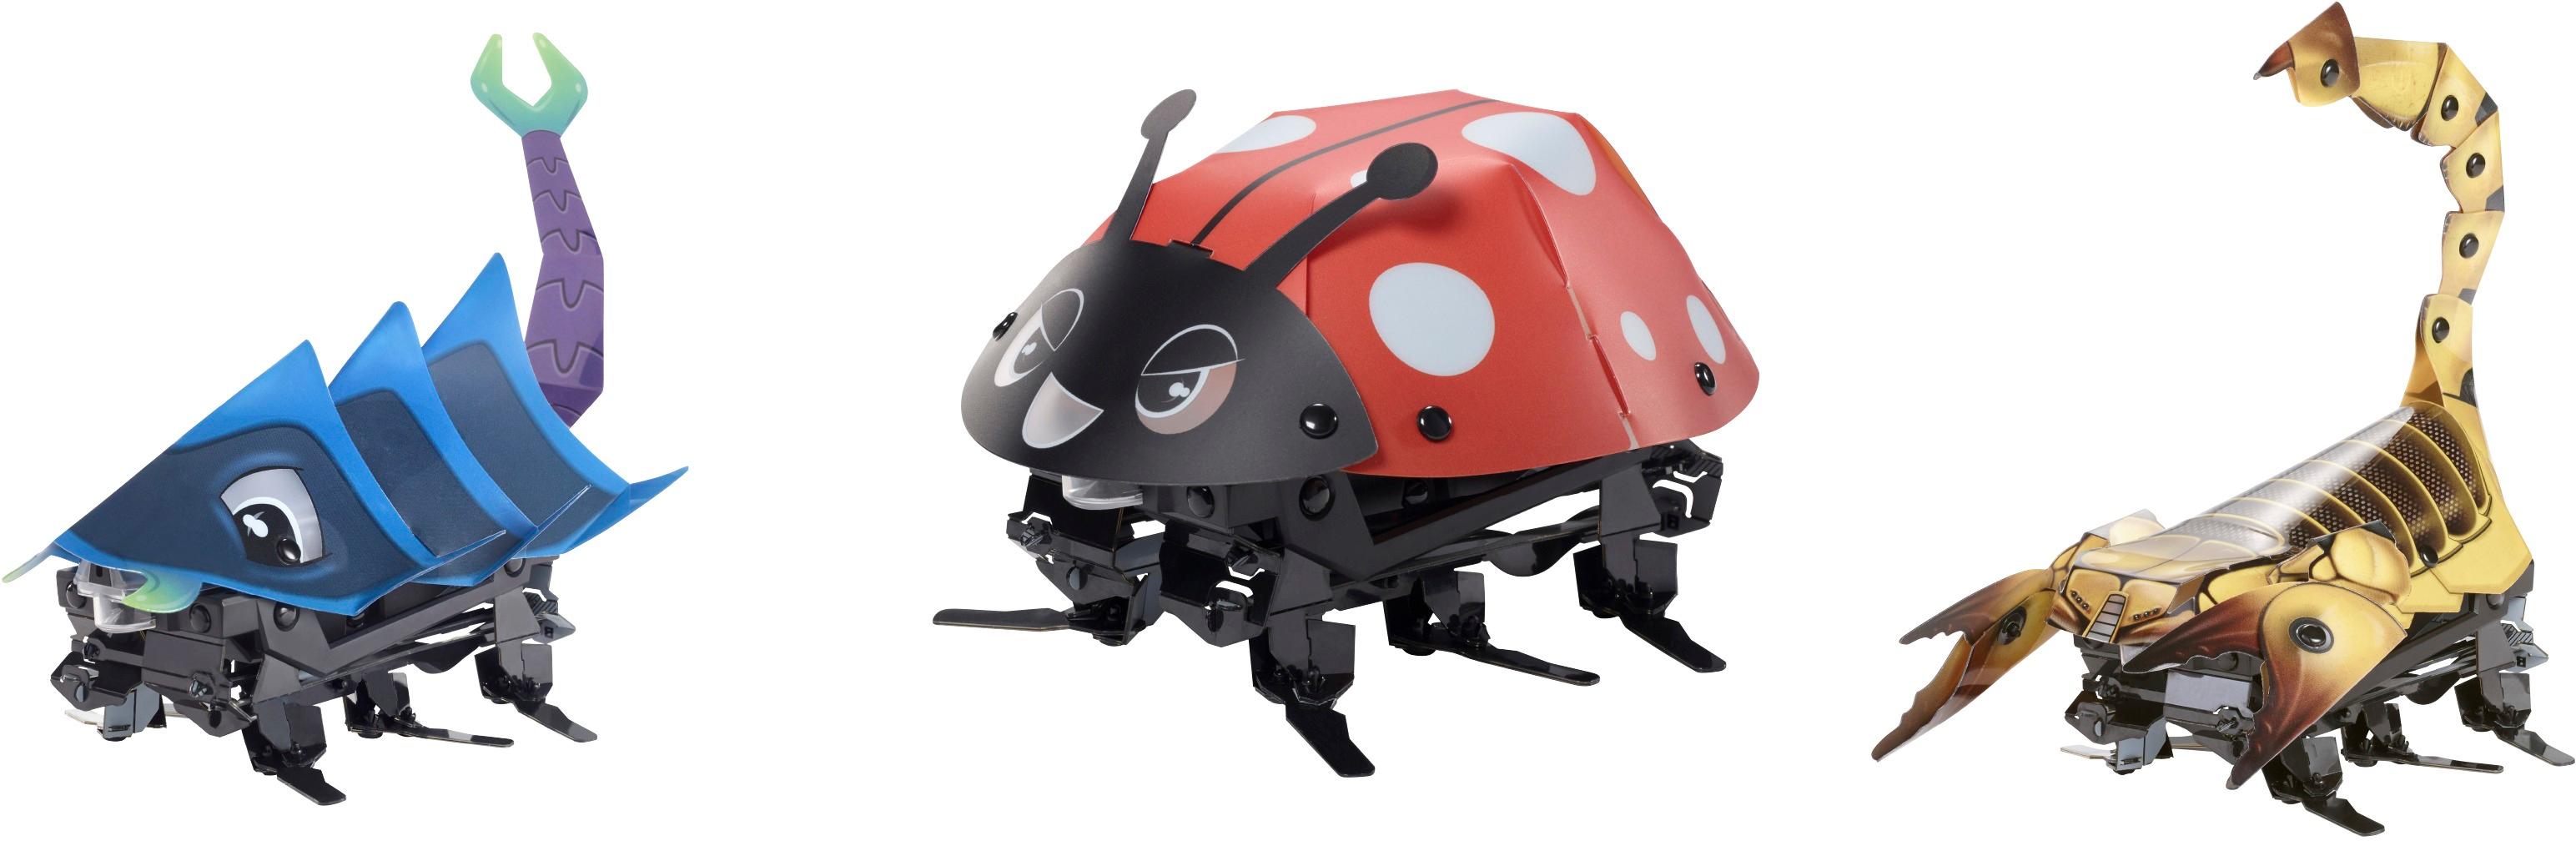 Best Buy: Mattel Kamigami Robot Styles Vary Styles May FRC94